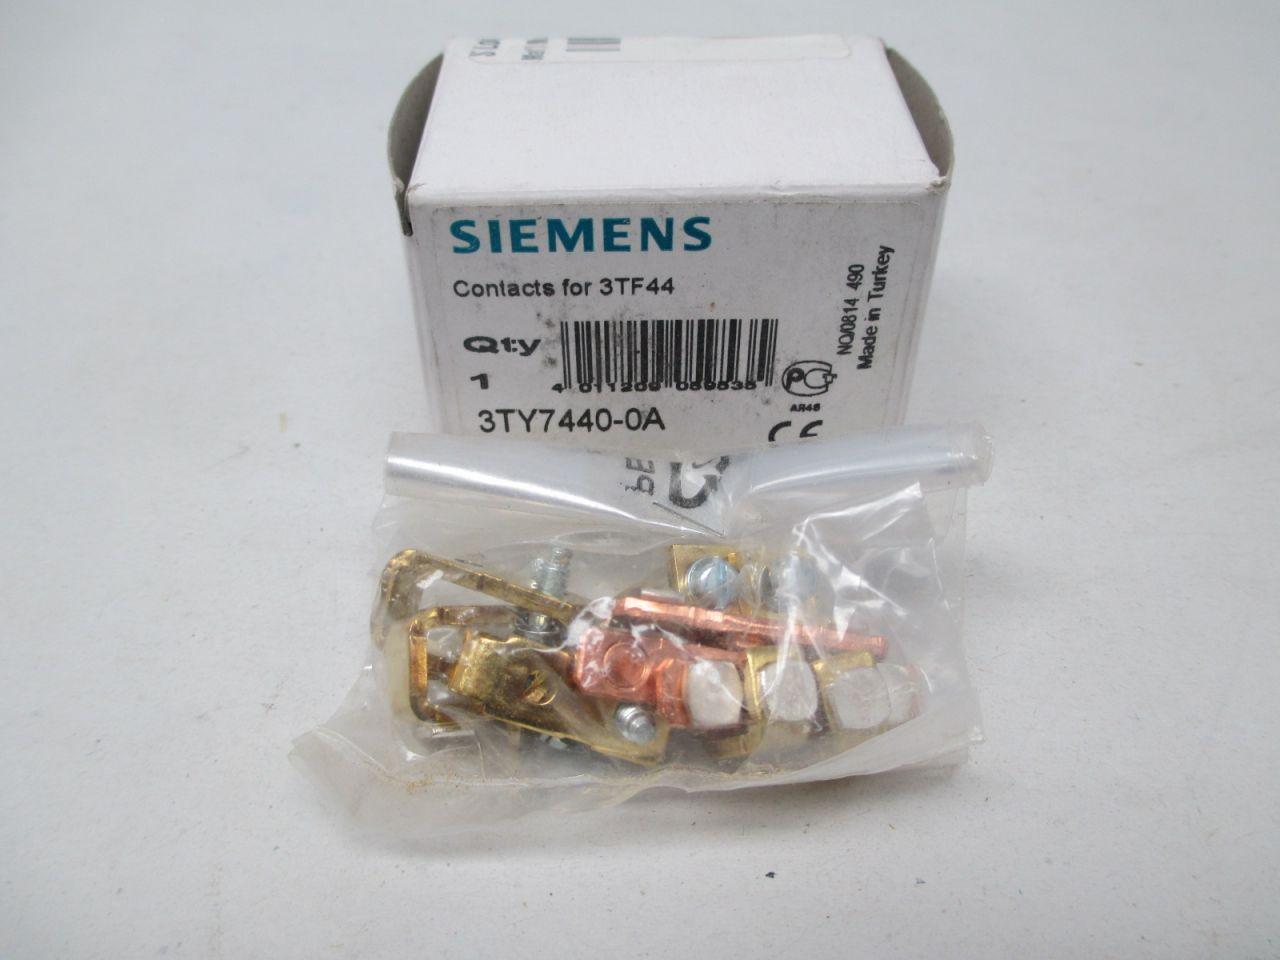 Siemens 3ty7440-0a 3ty7 440-0a para 3tf44 unused 